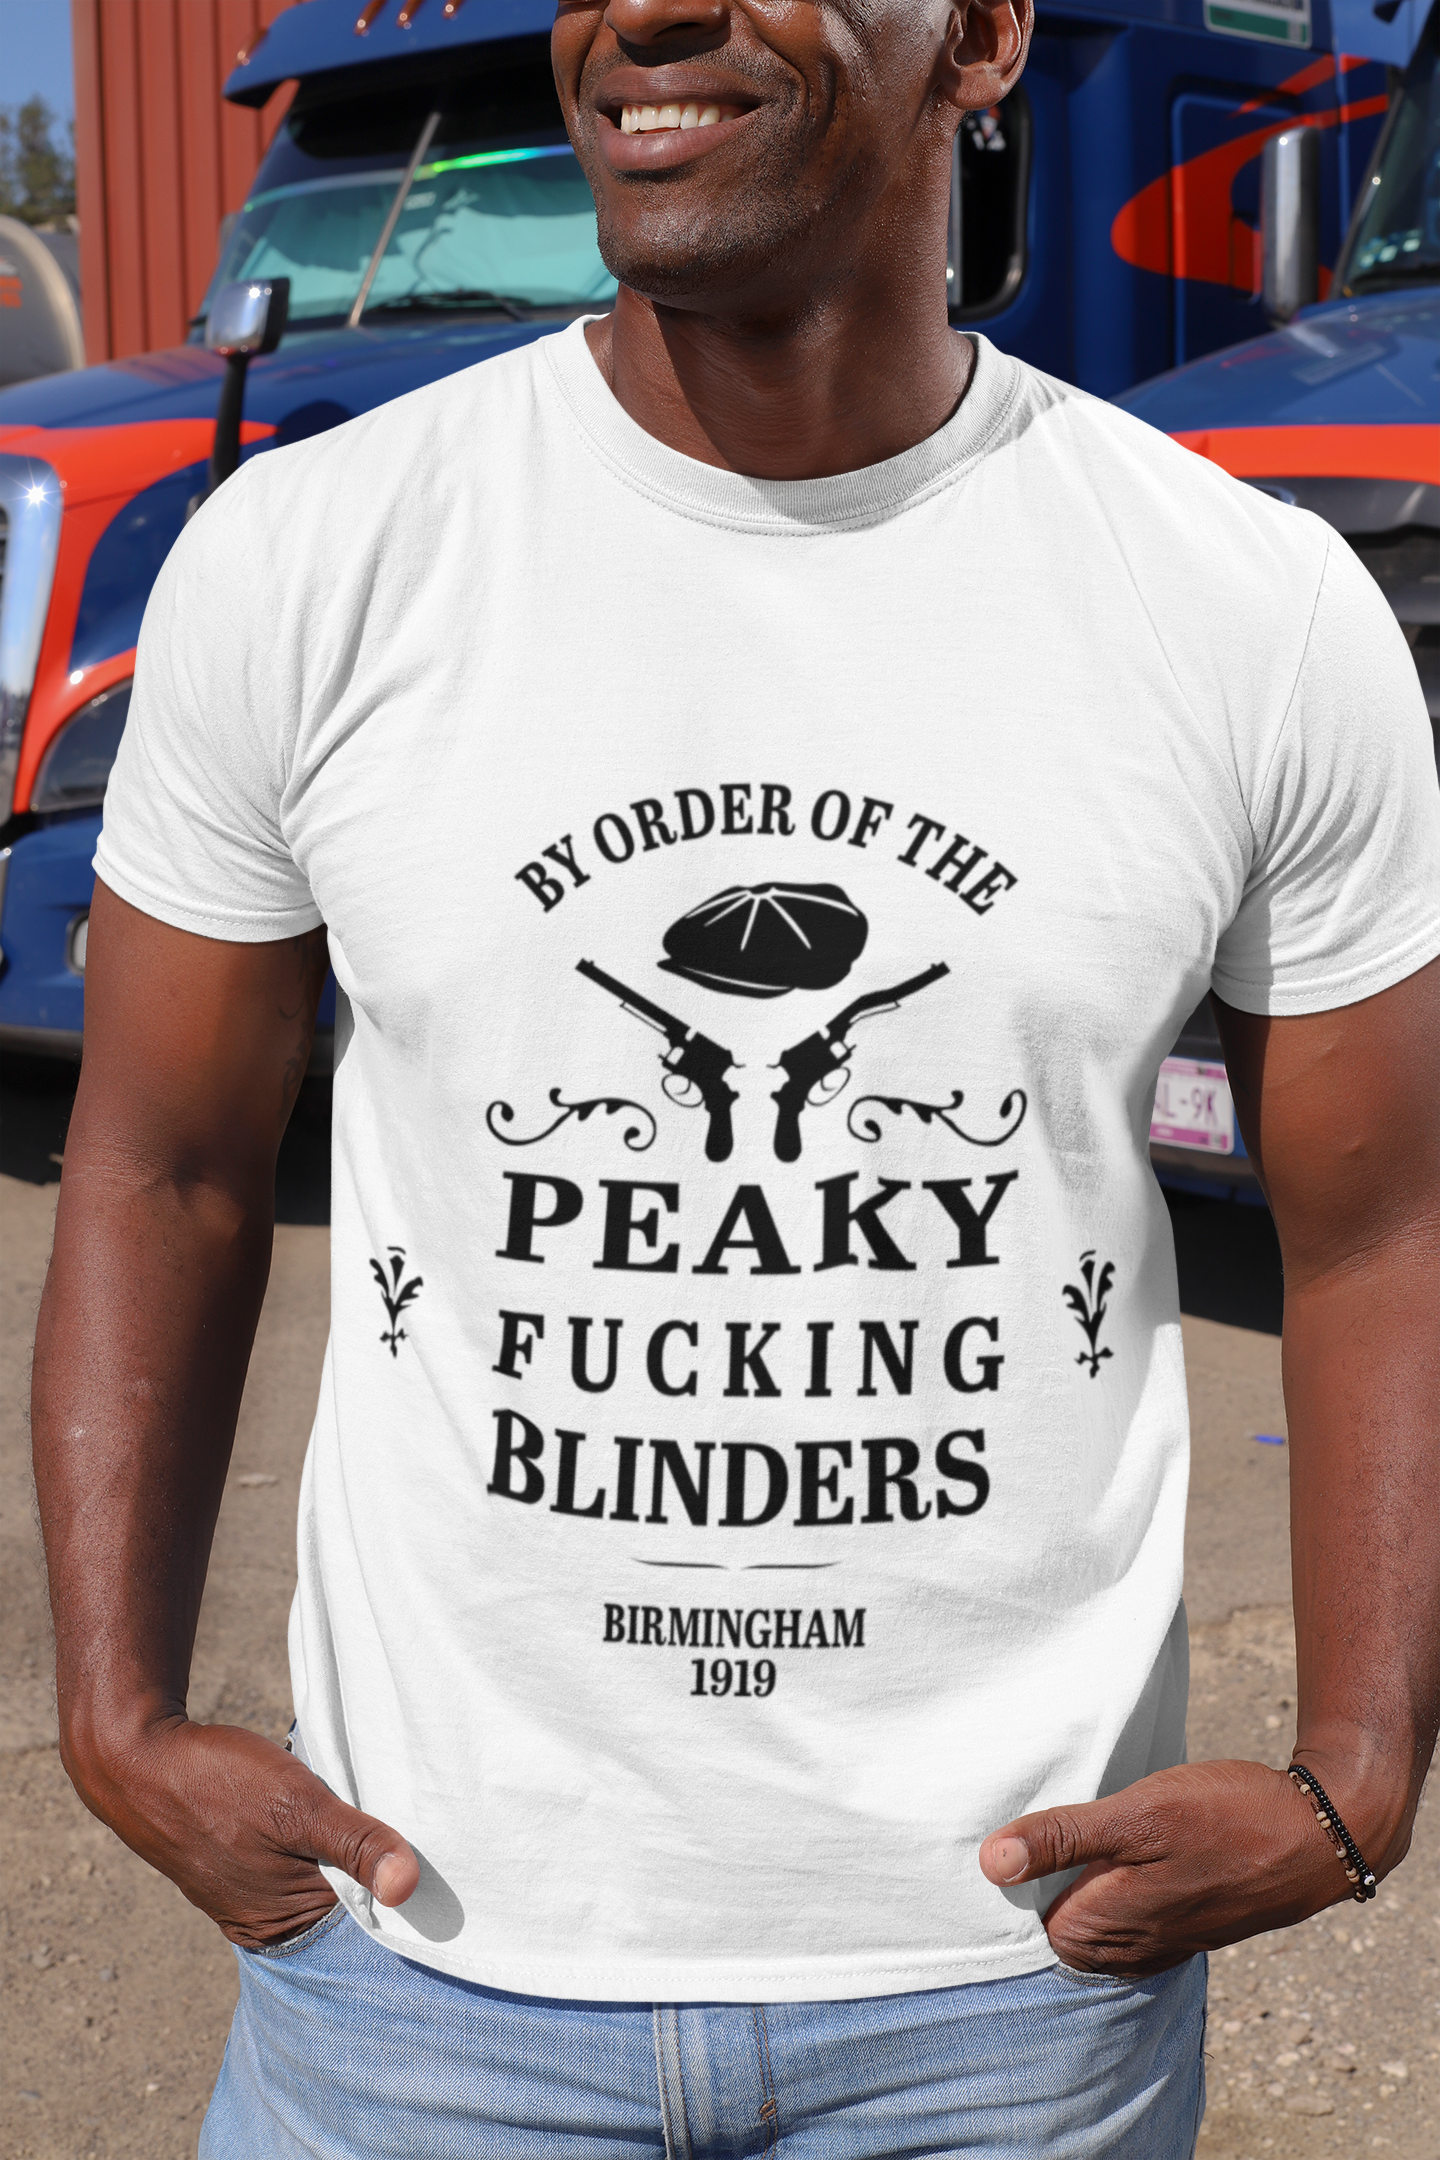 By order of the Peaky fucking Blinders birmingham 1919 shirt